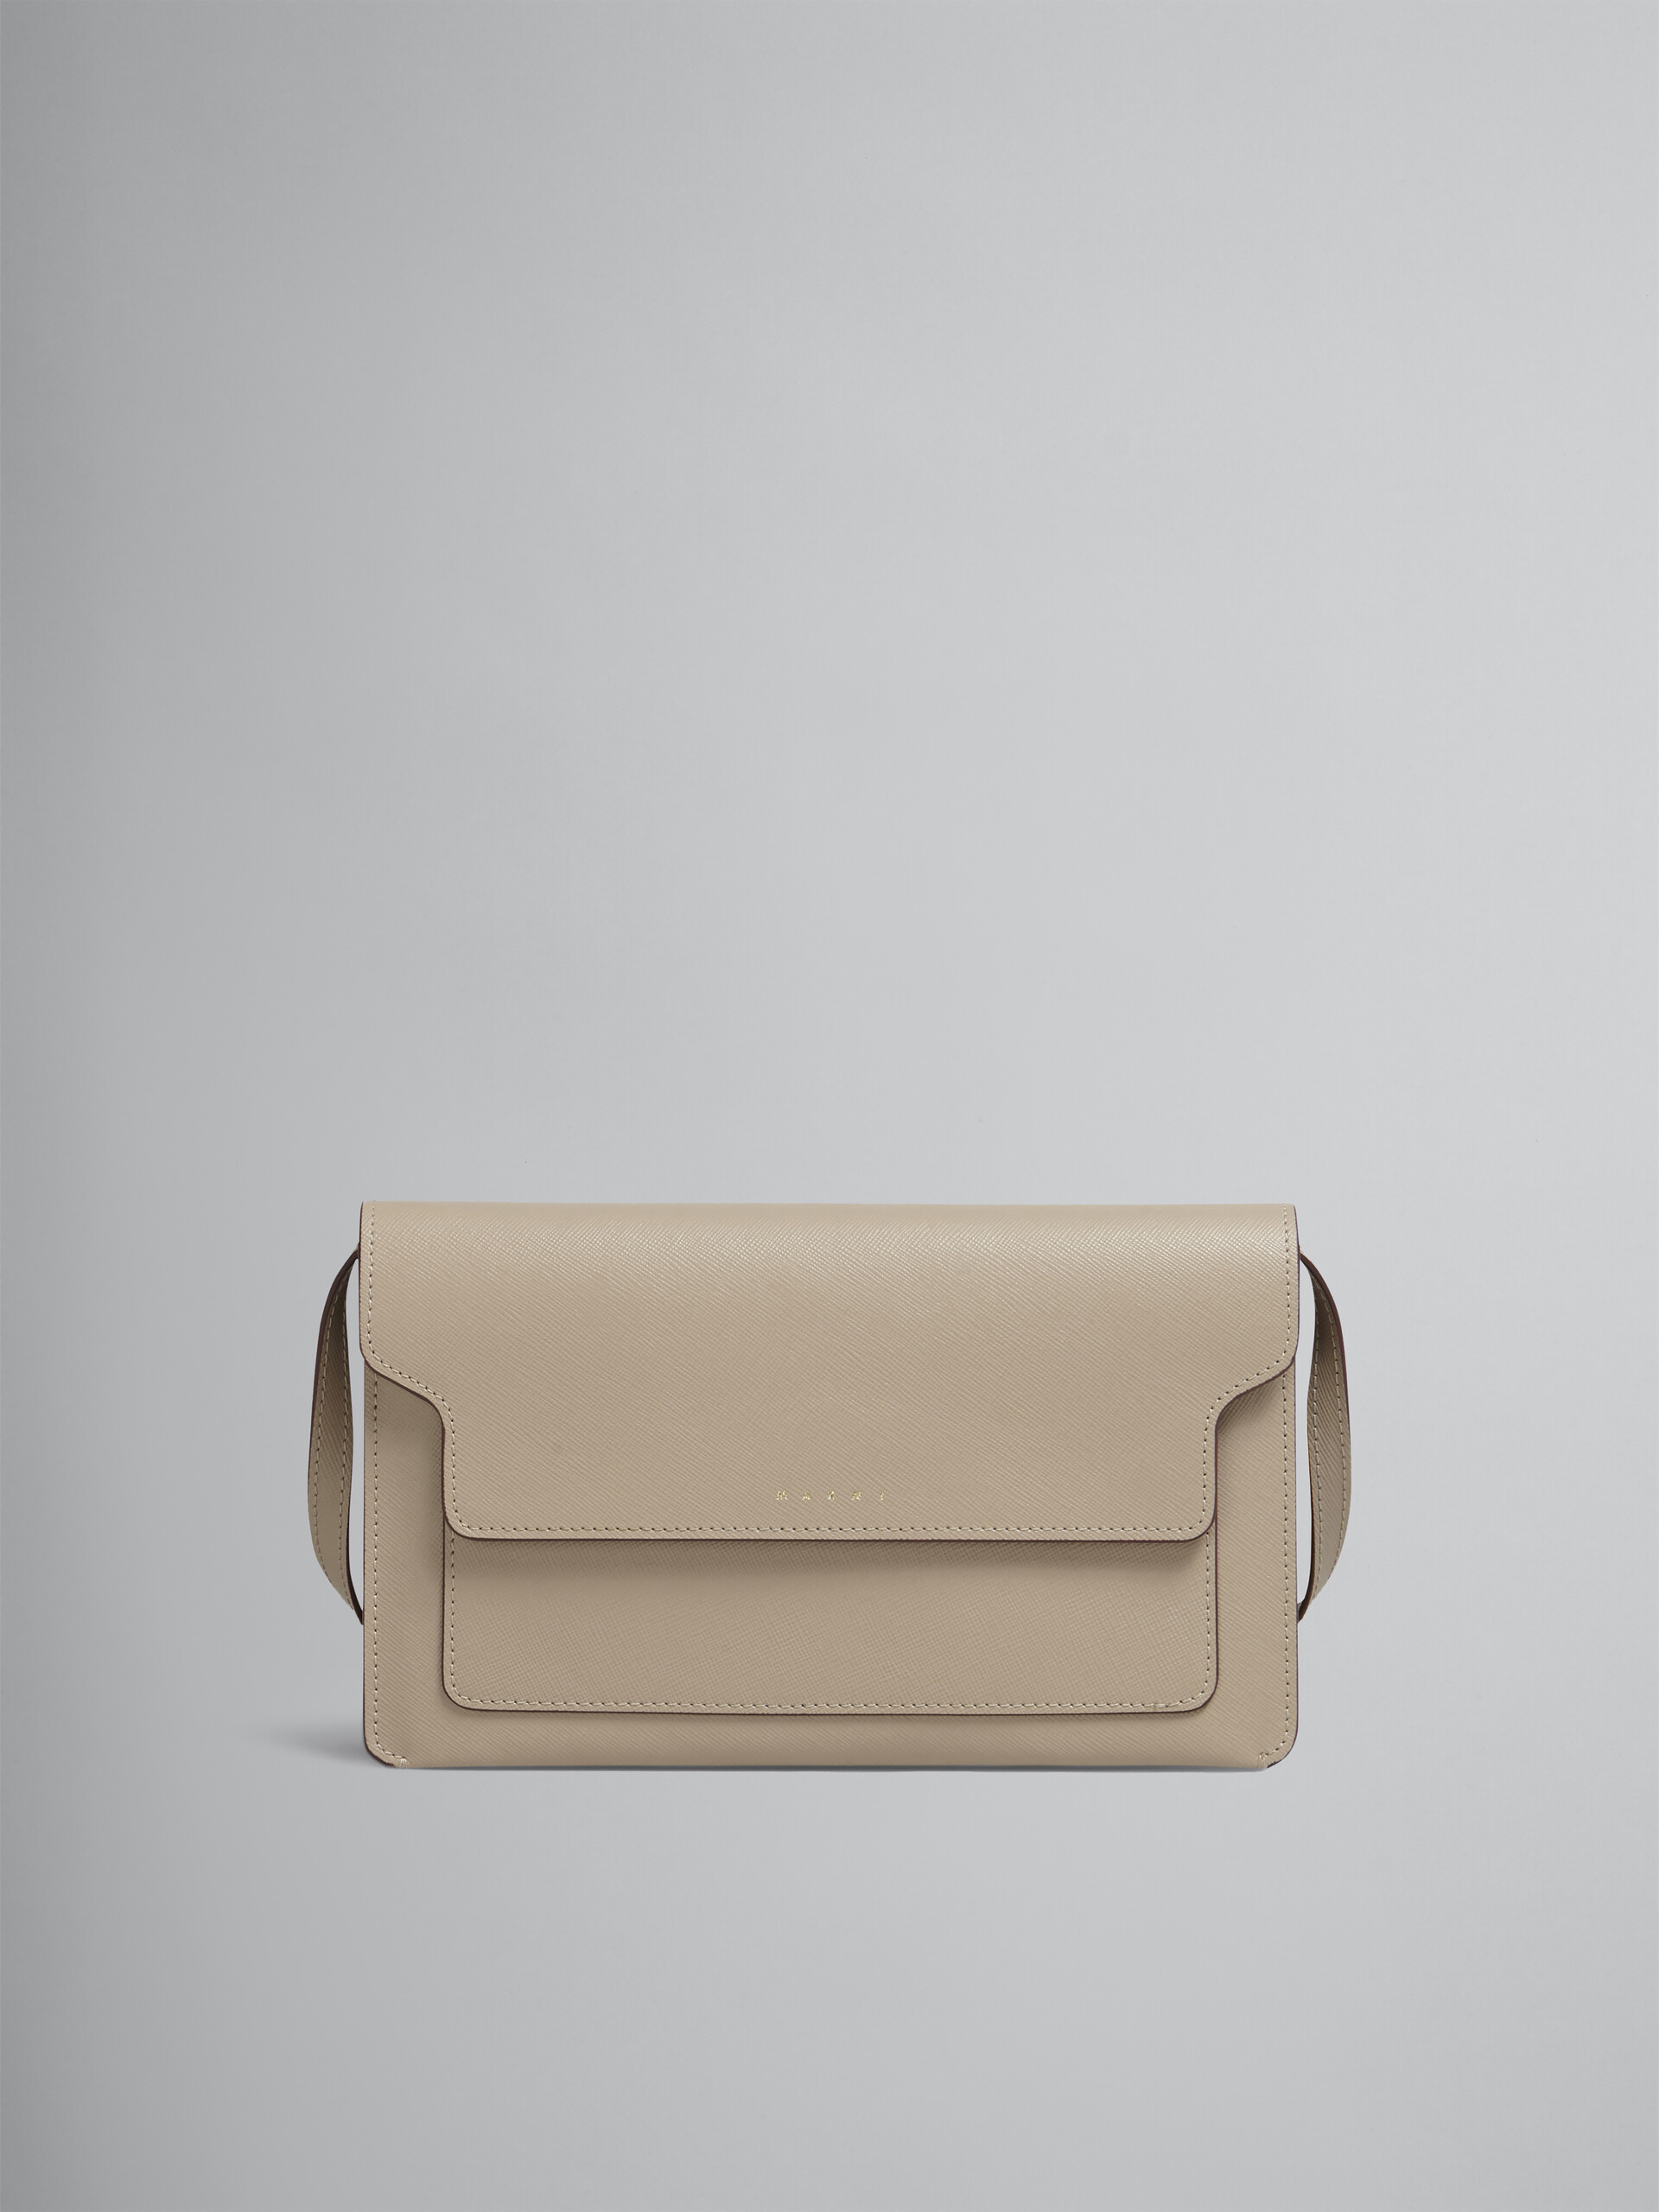 TRUNK clutch bag in beige saffiano leather - Pochette - Image 1